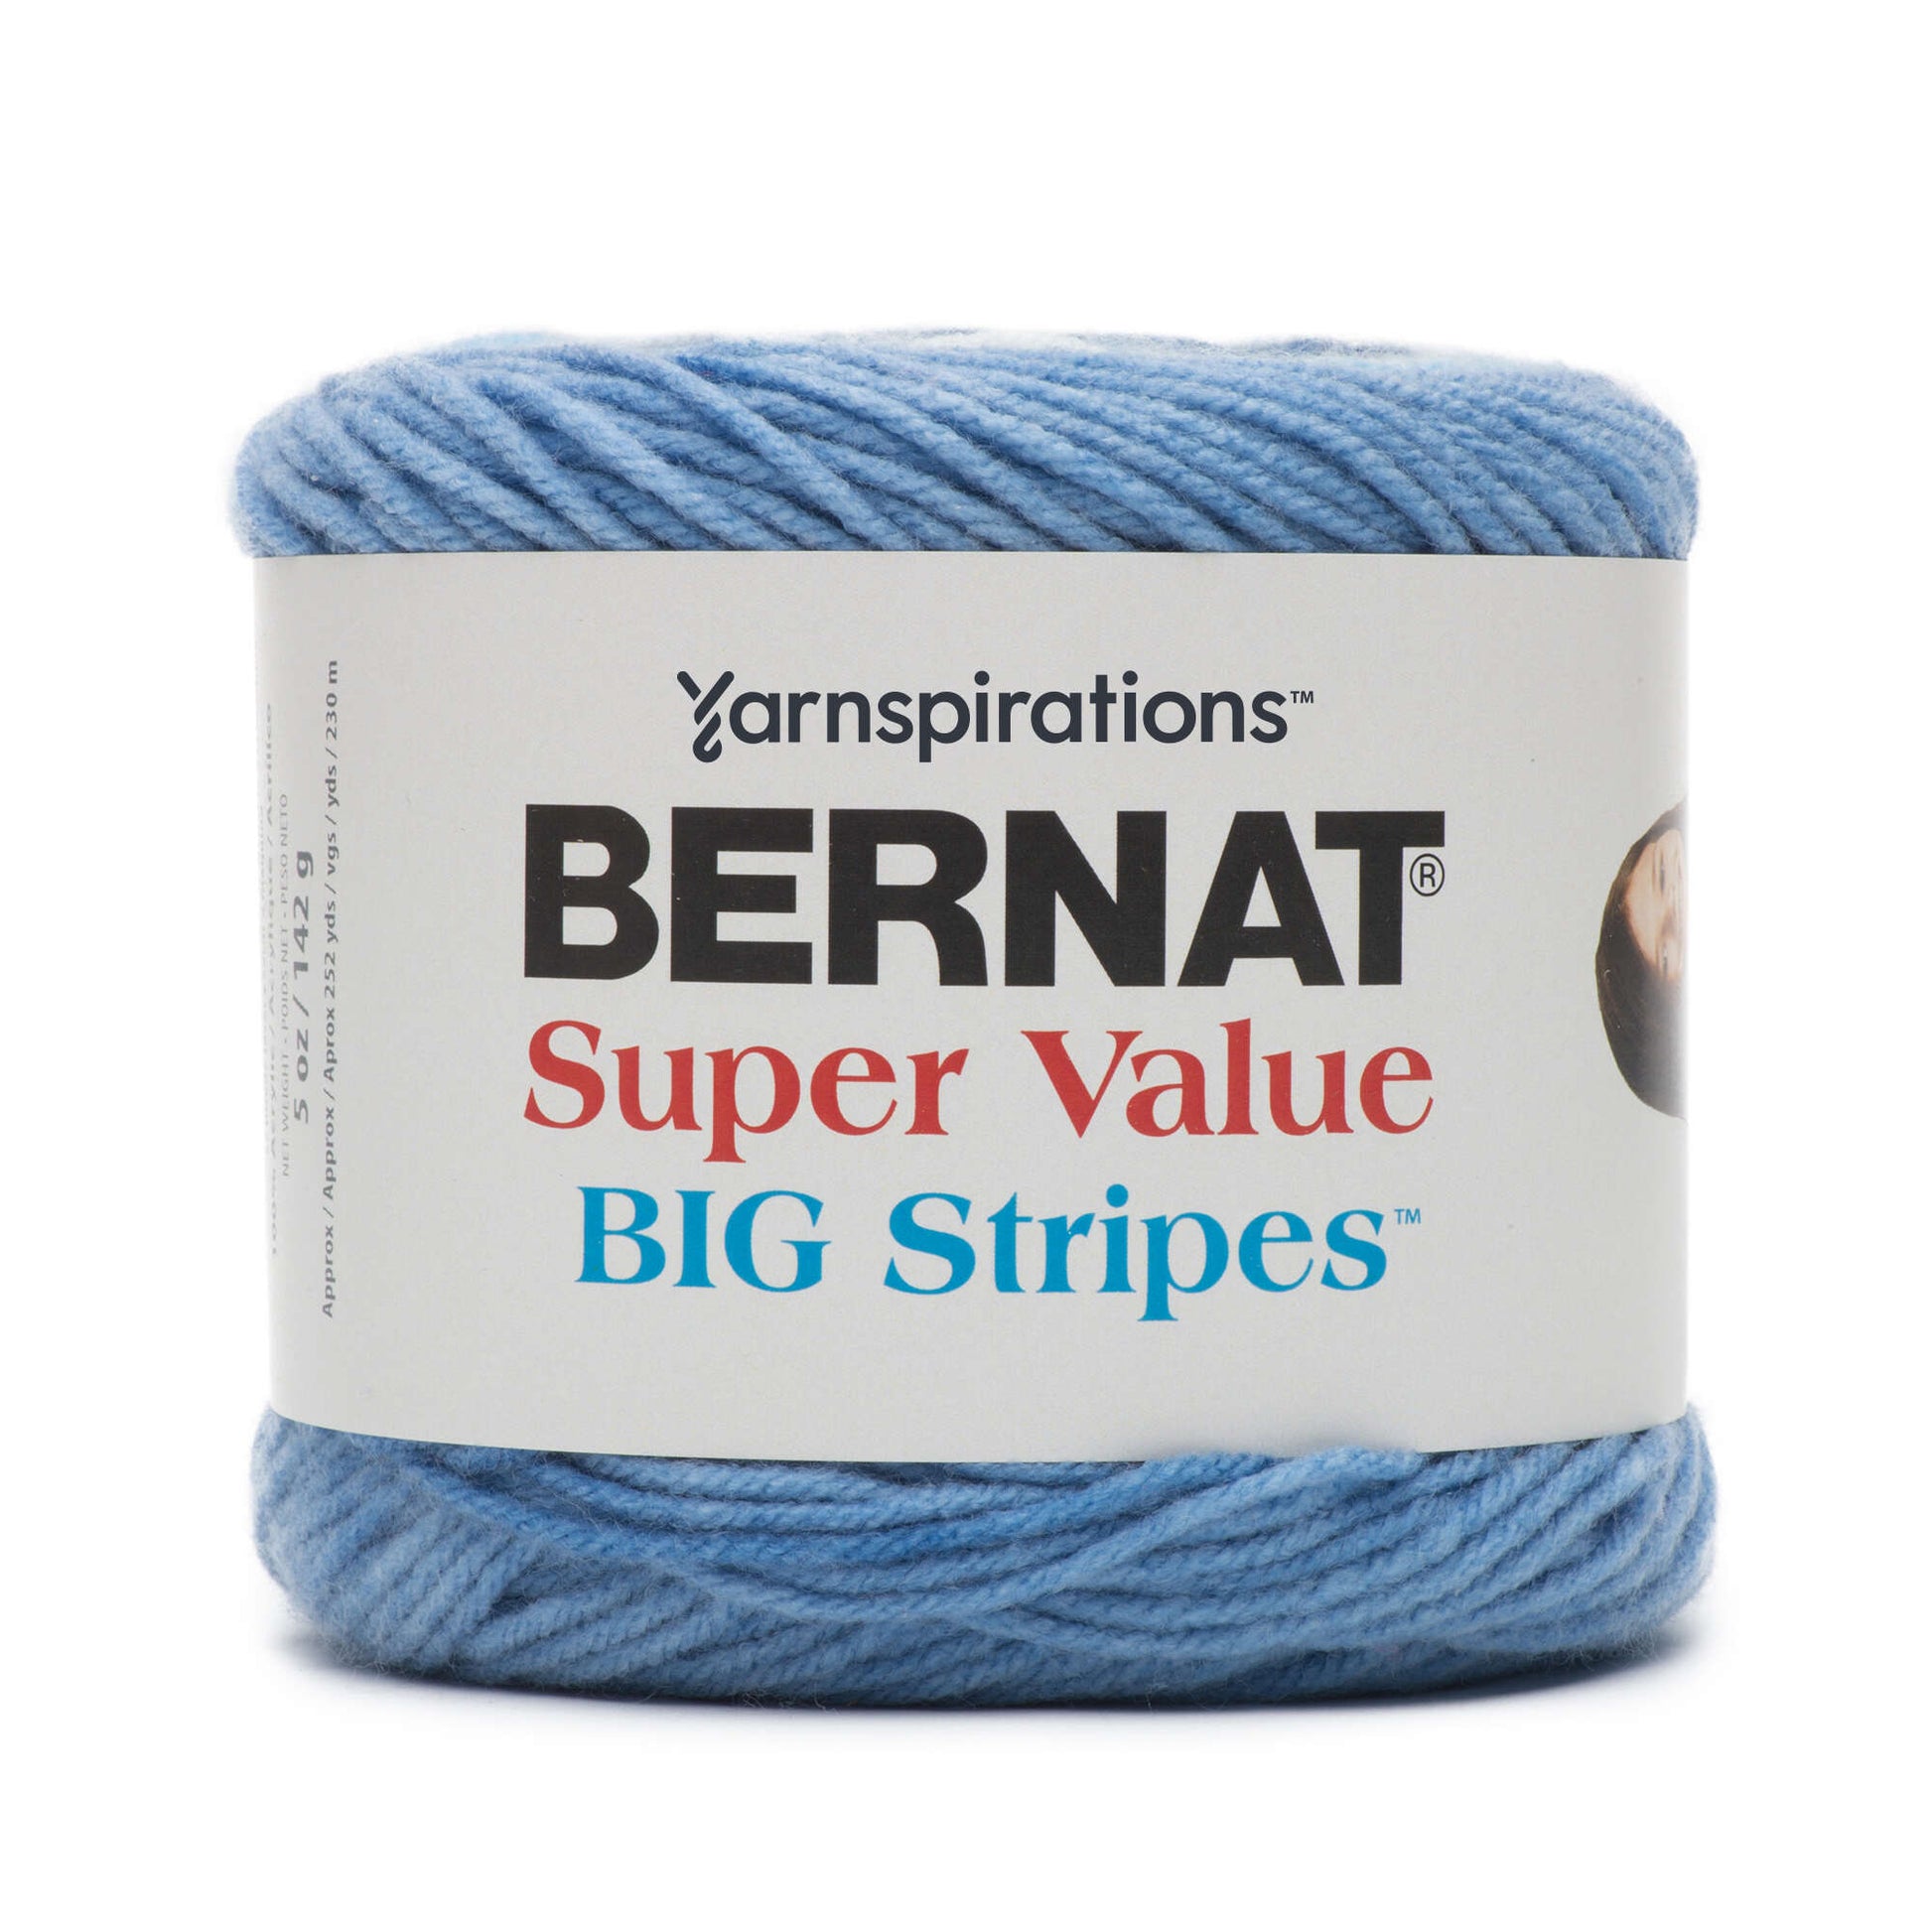 Bernat Super Value Big Stripes Yarn - Discontinued Shades Blue Jeans